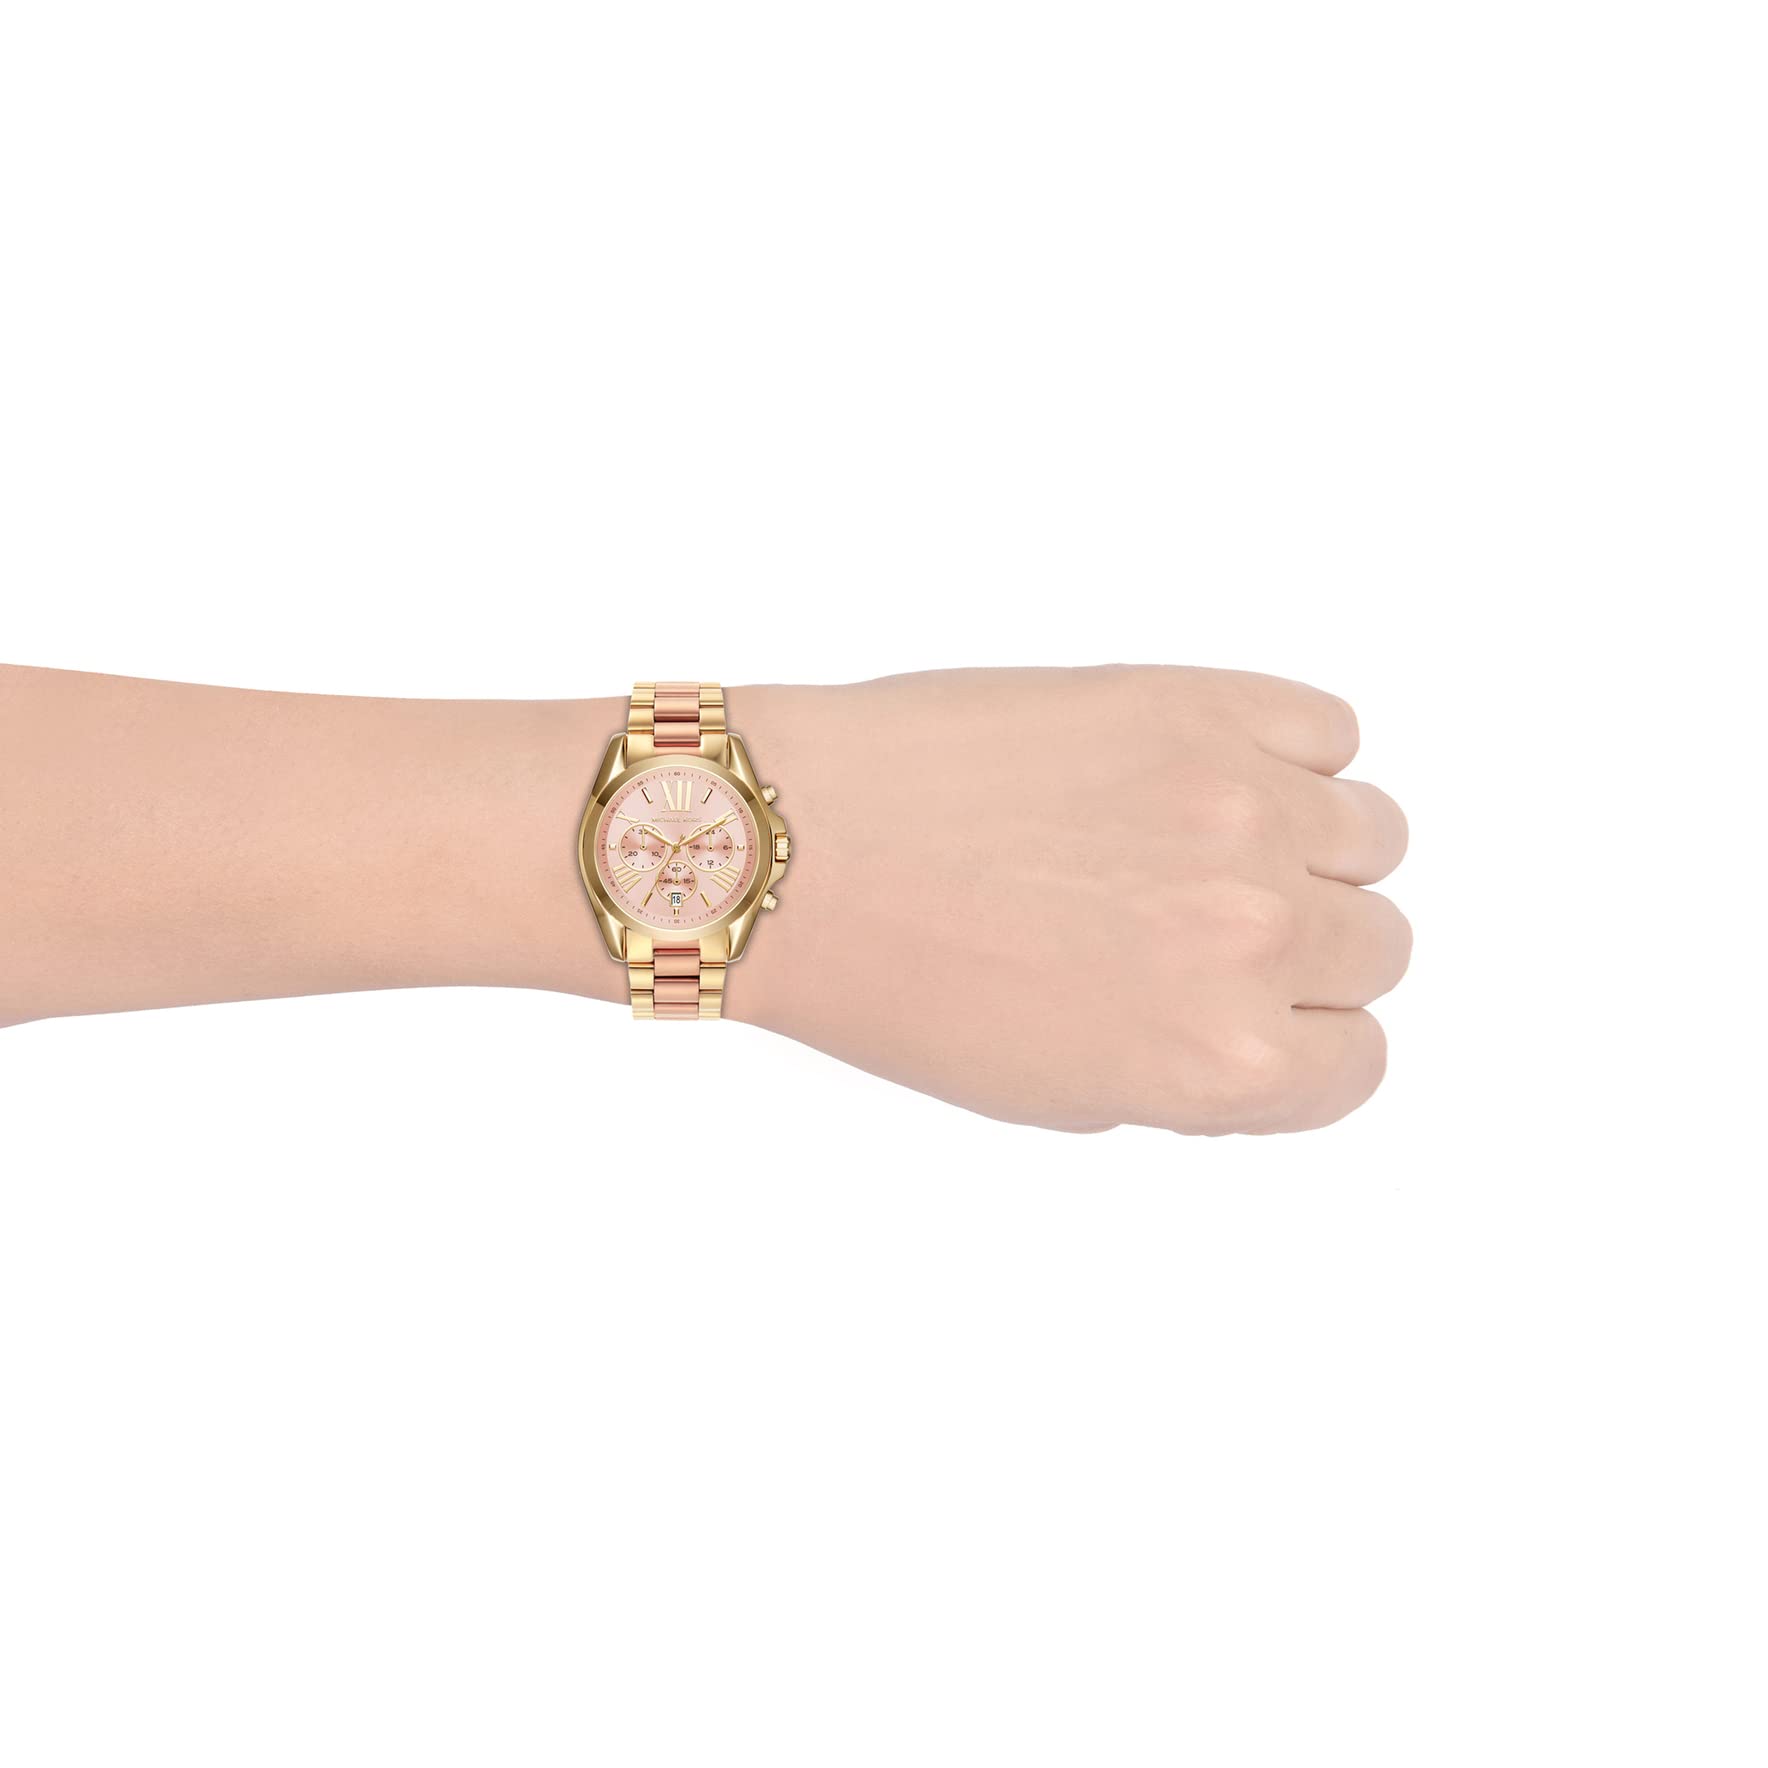 Michael Kors Women's Watch BRADSHAW, 43 mm case size, Quartz Chronograph movement, Stainless Steel strap